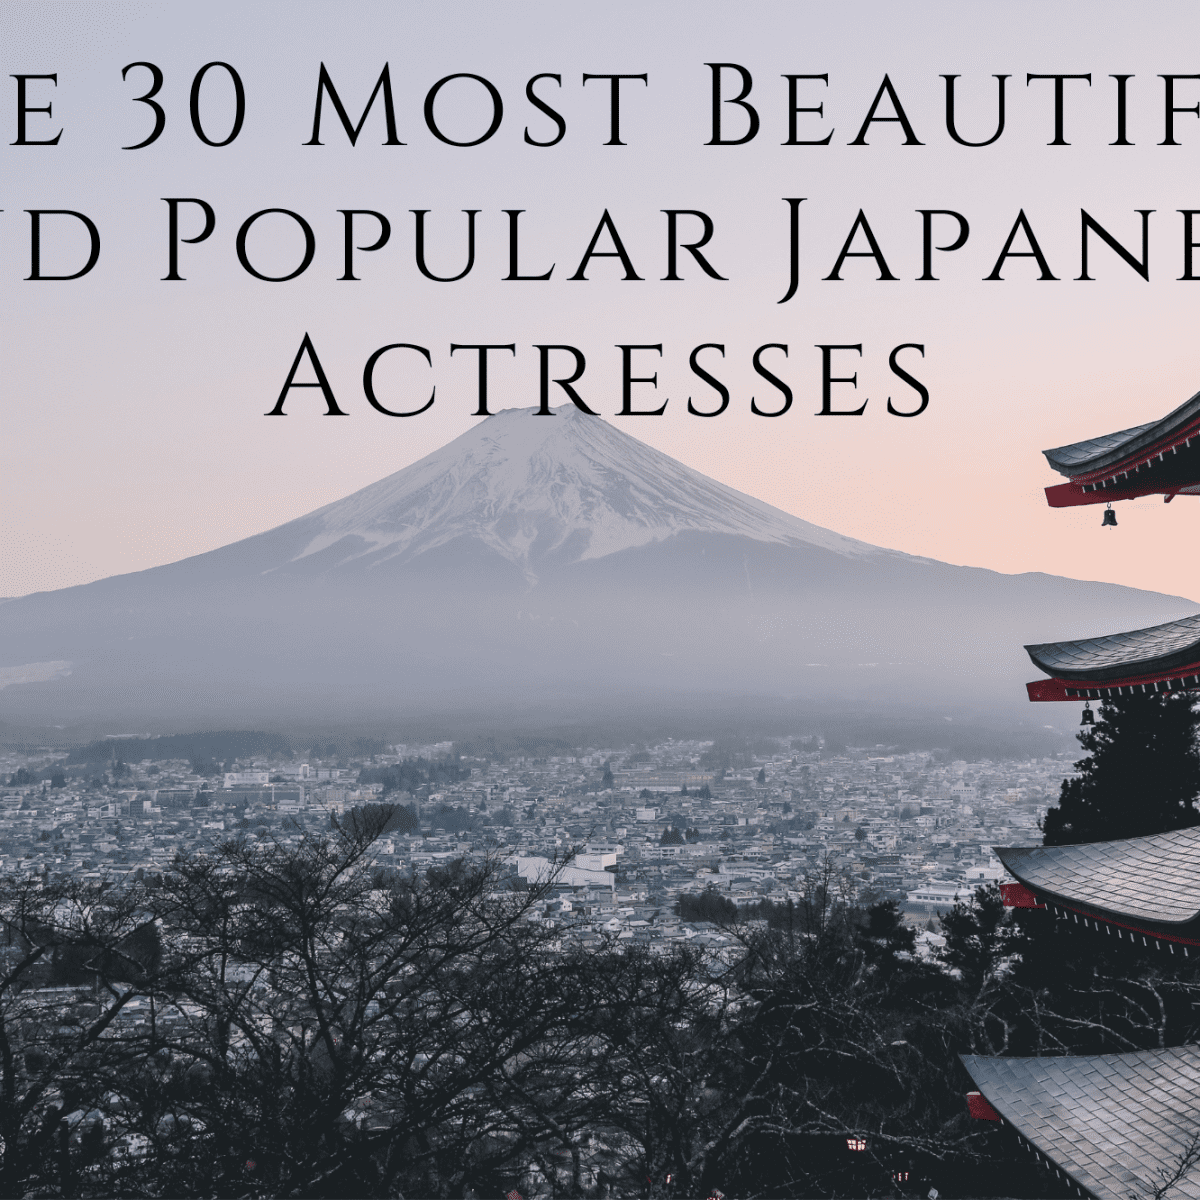 Japanese tall actress 2